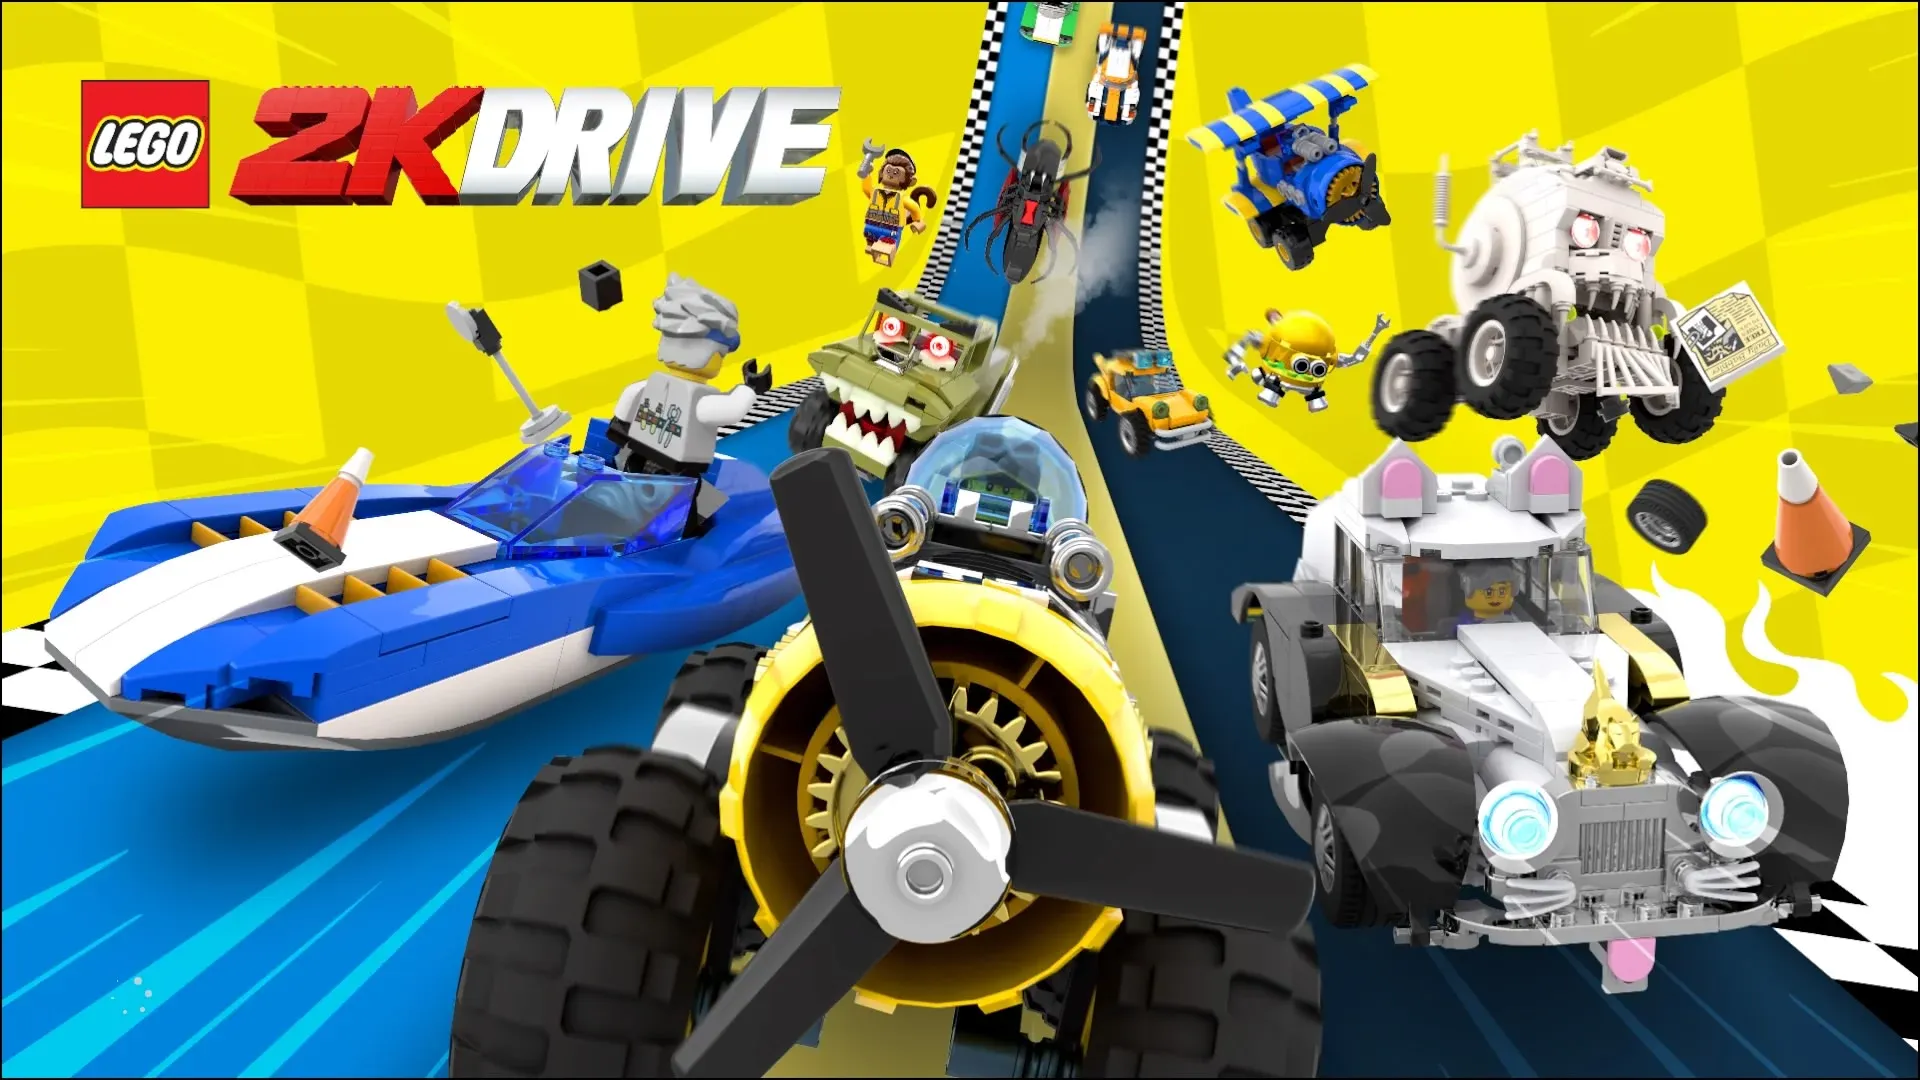 LEGO 2K Drive: Bricks Go Fast